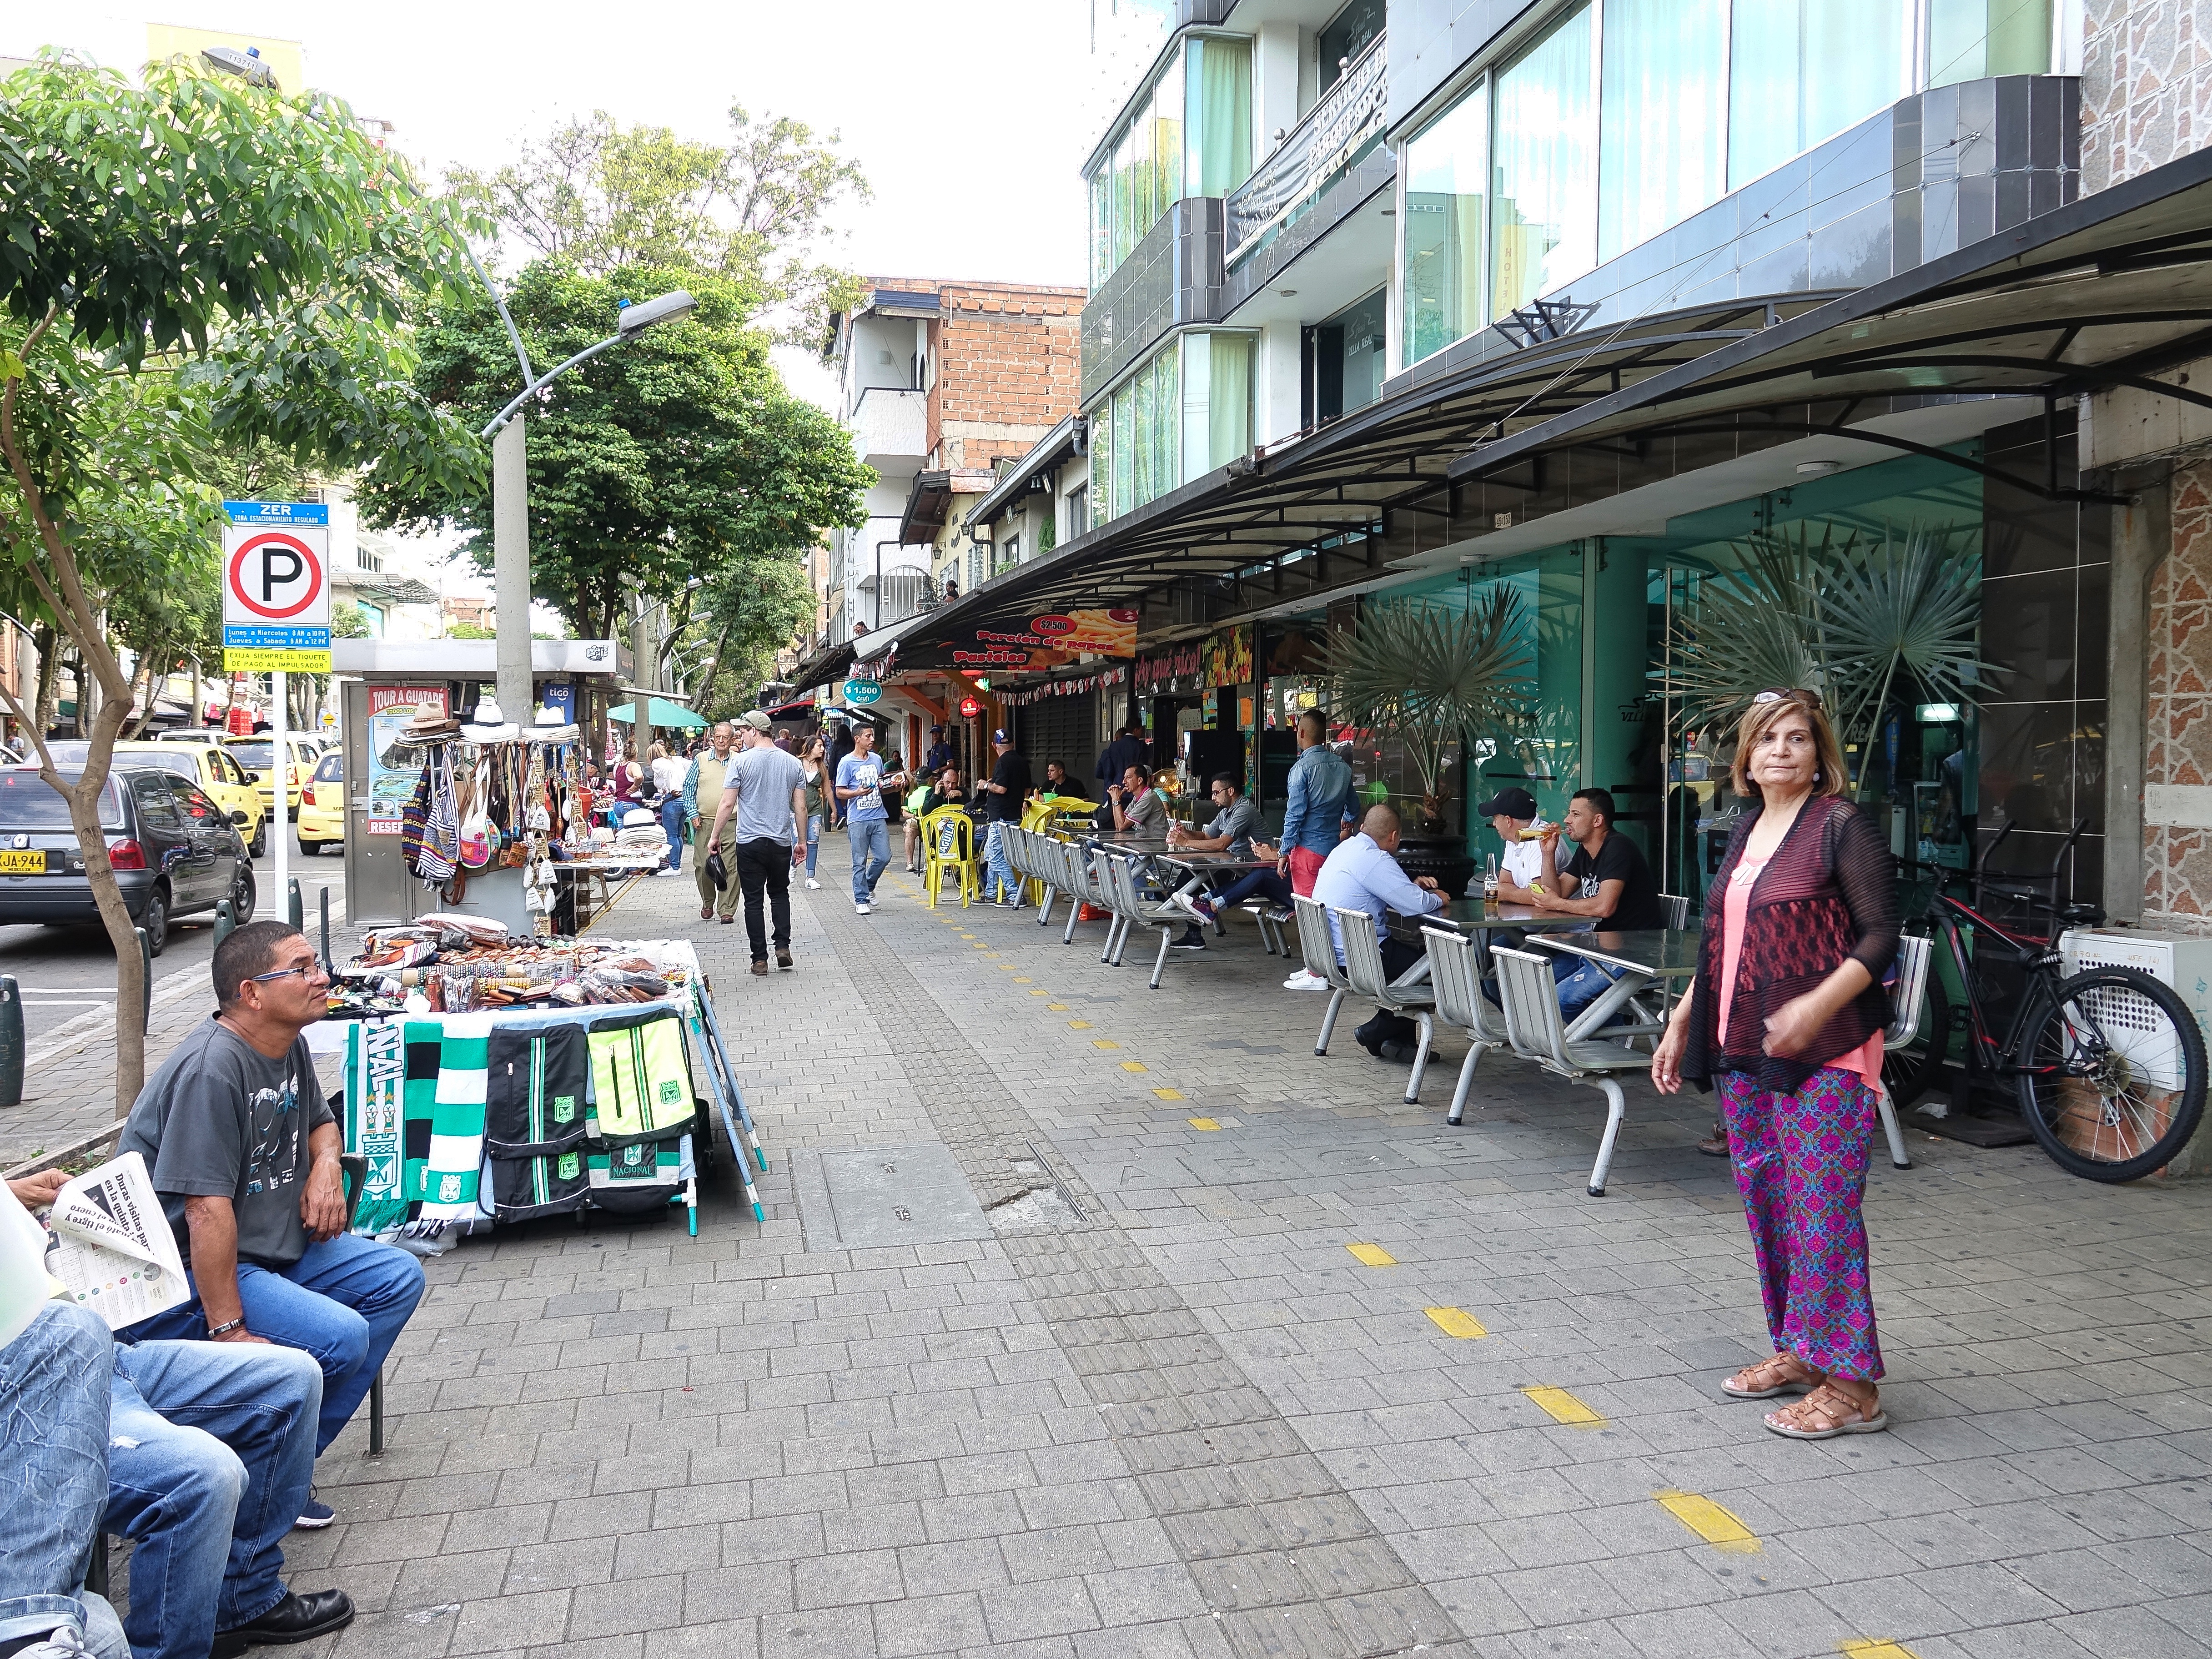 Laureles had lots of sidewalk cafes and restaurants